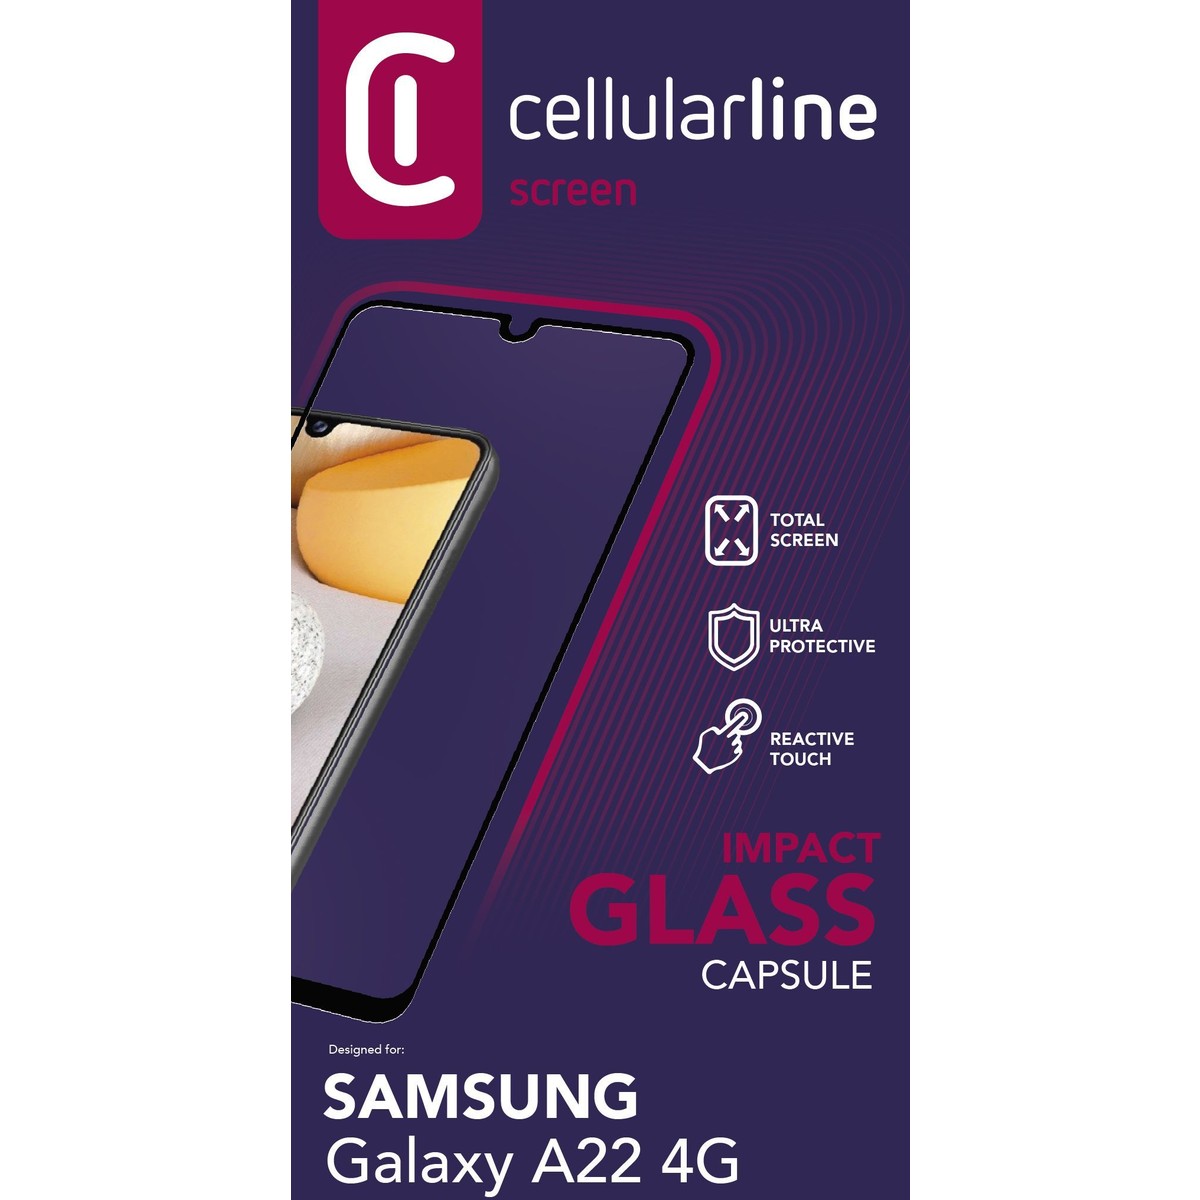 Schutzglas IMPACT GLASS CAPSULE für Samsung Galaxy A22 4G